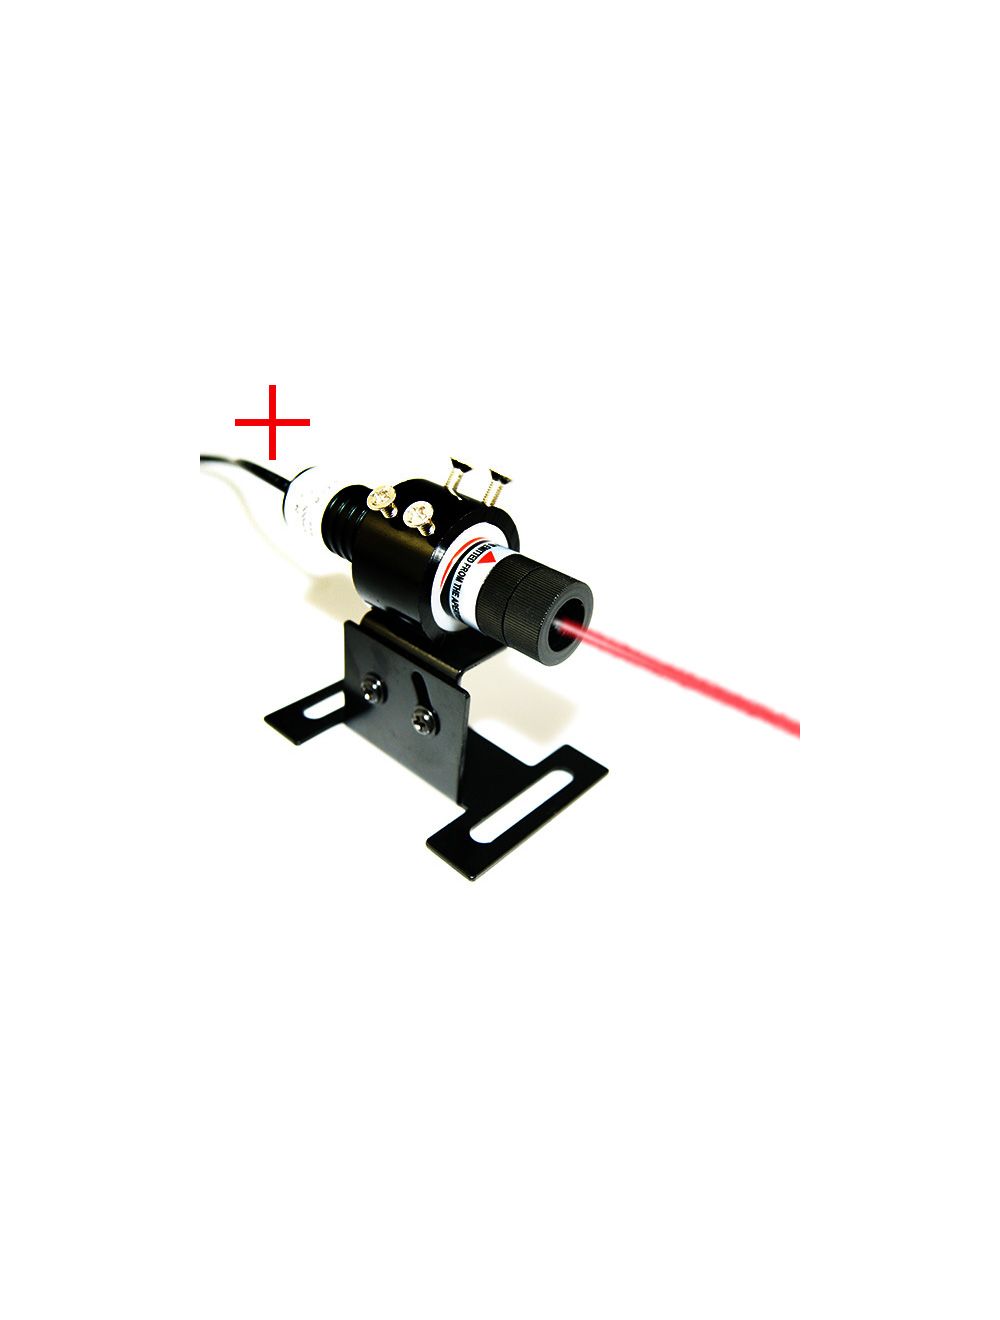 Focusable 635nm Red Line Laser Module, Red Laser Line Generator